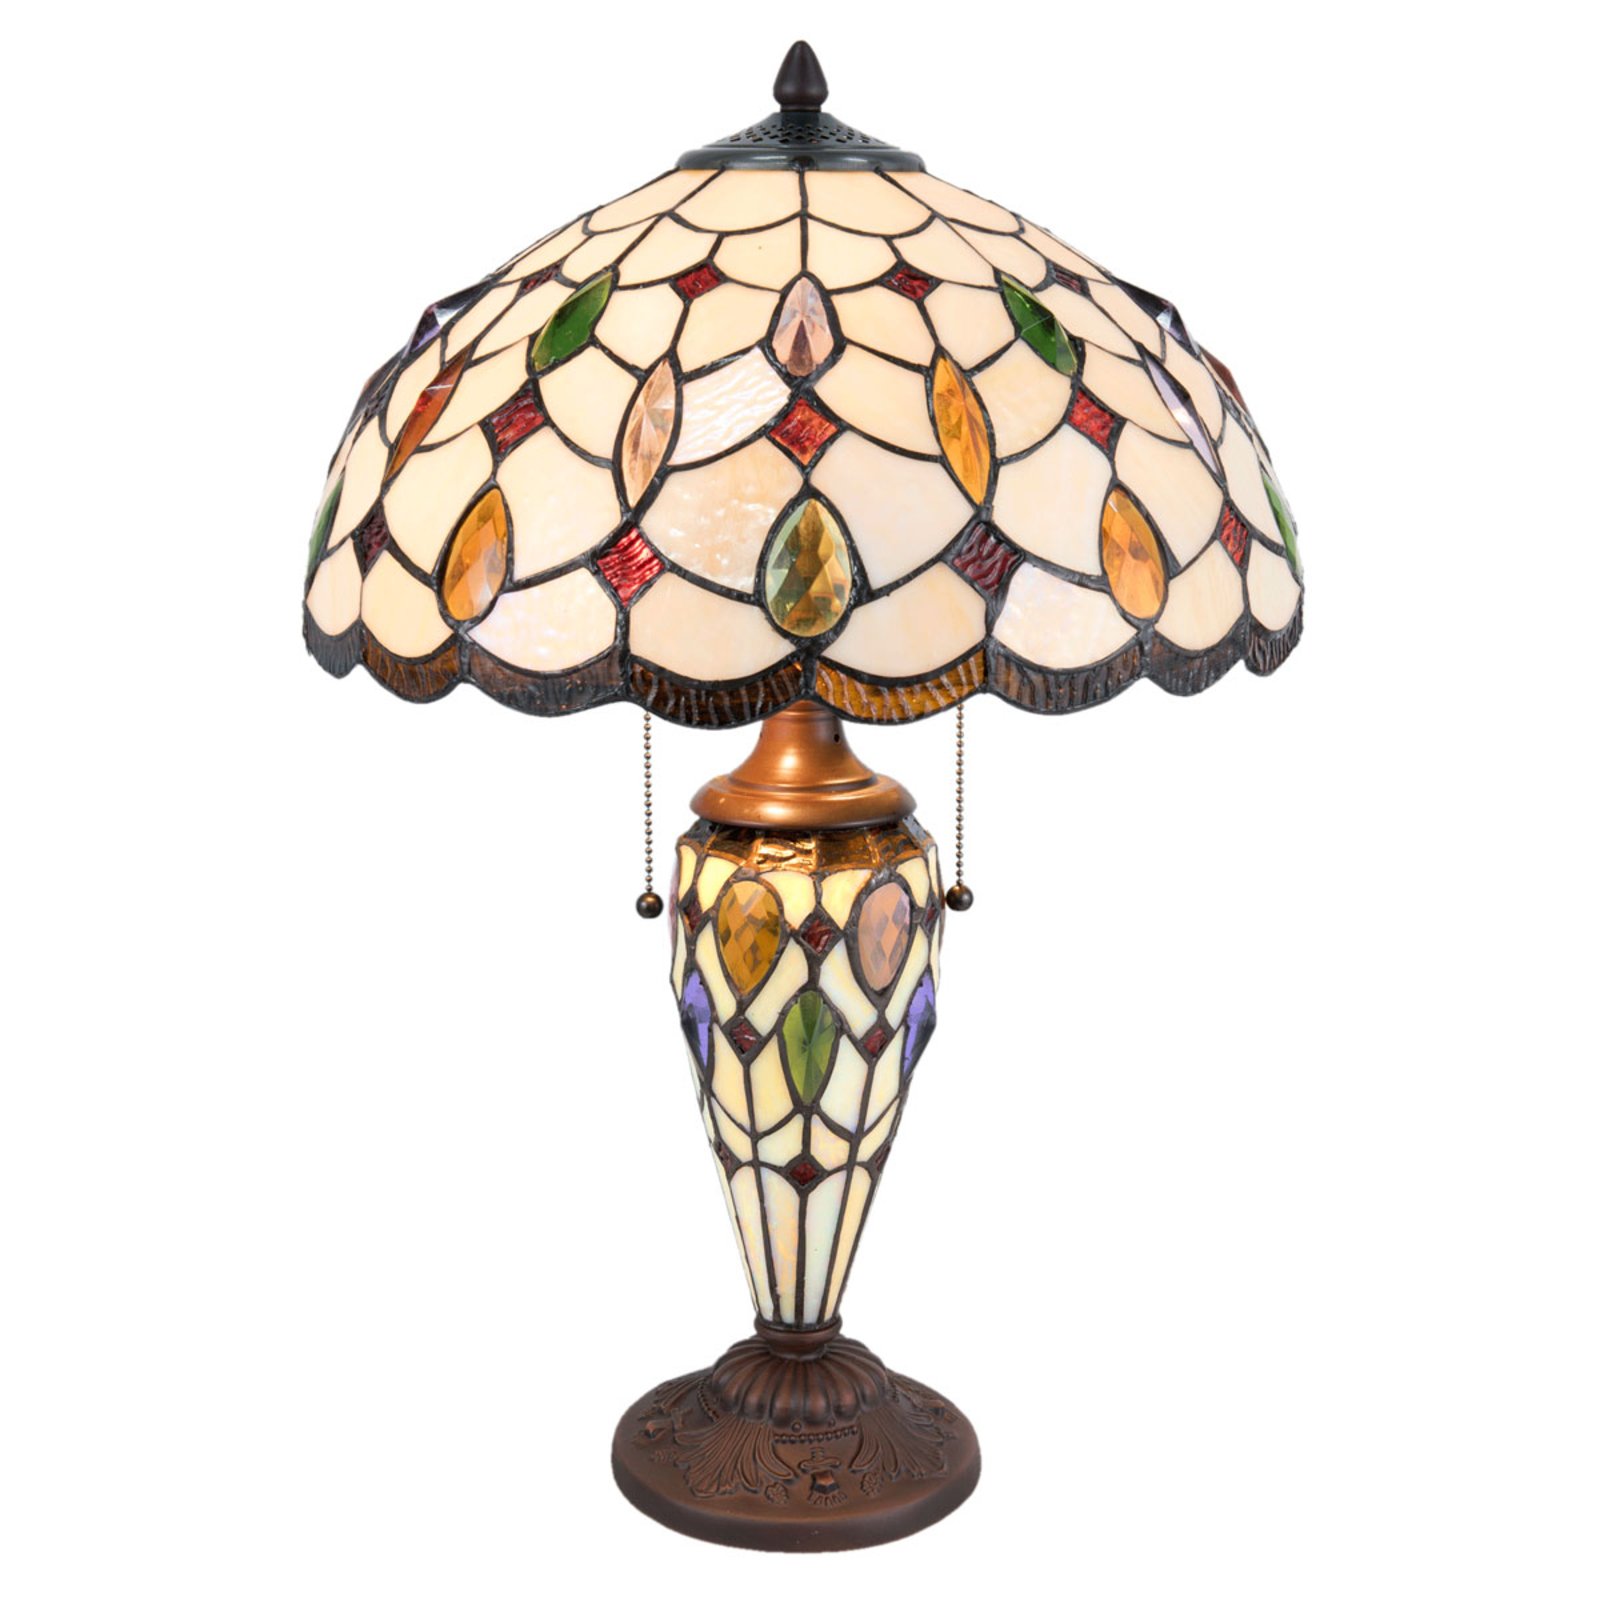 Tafellamp 5182 met bont Tiffany-glazen kap